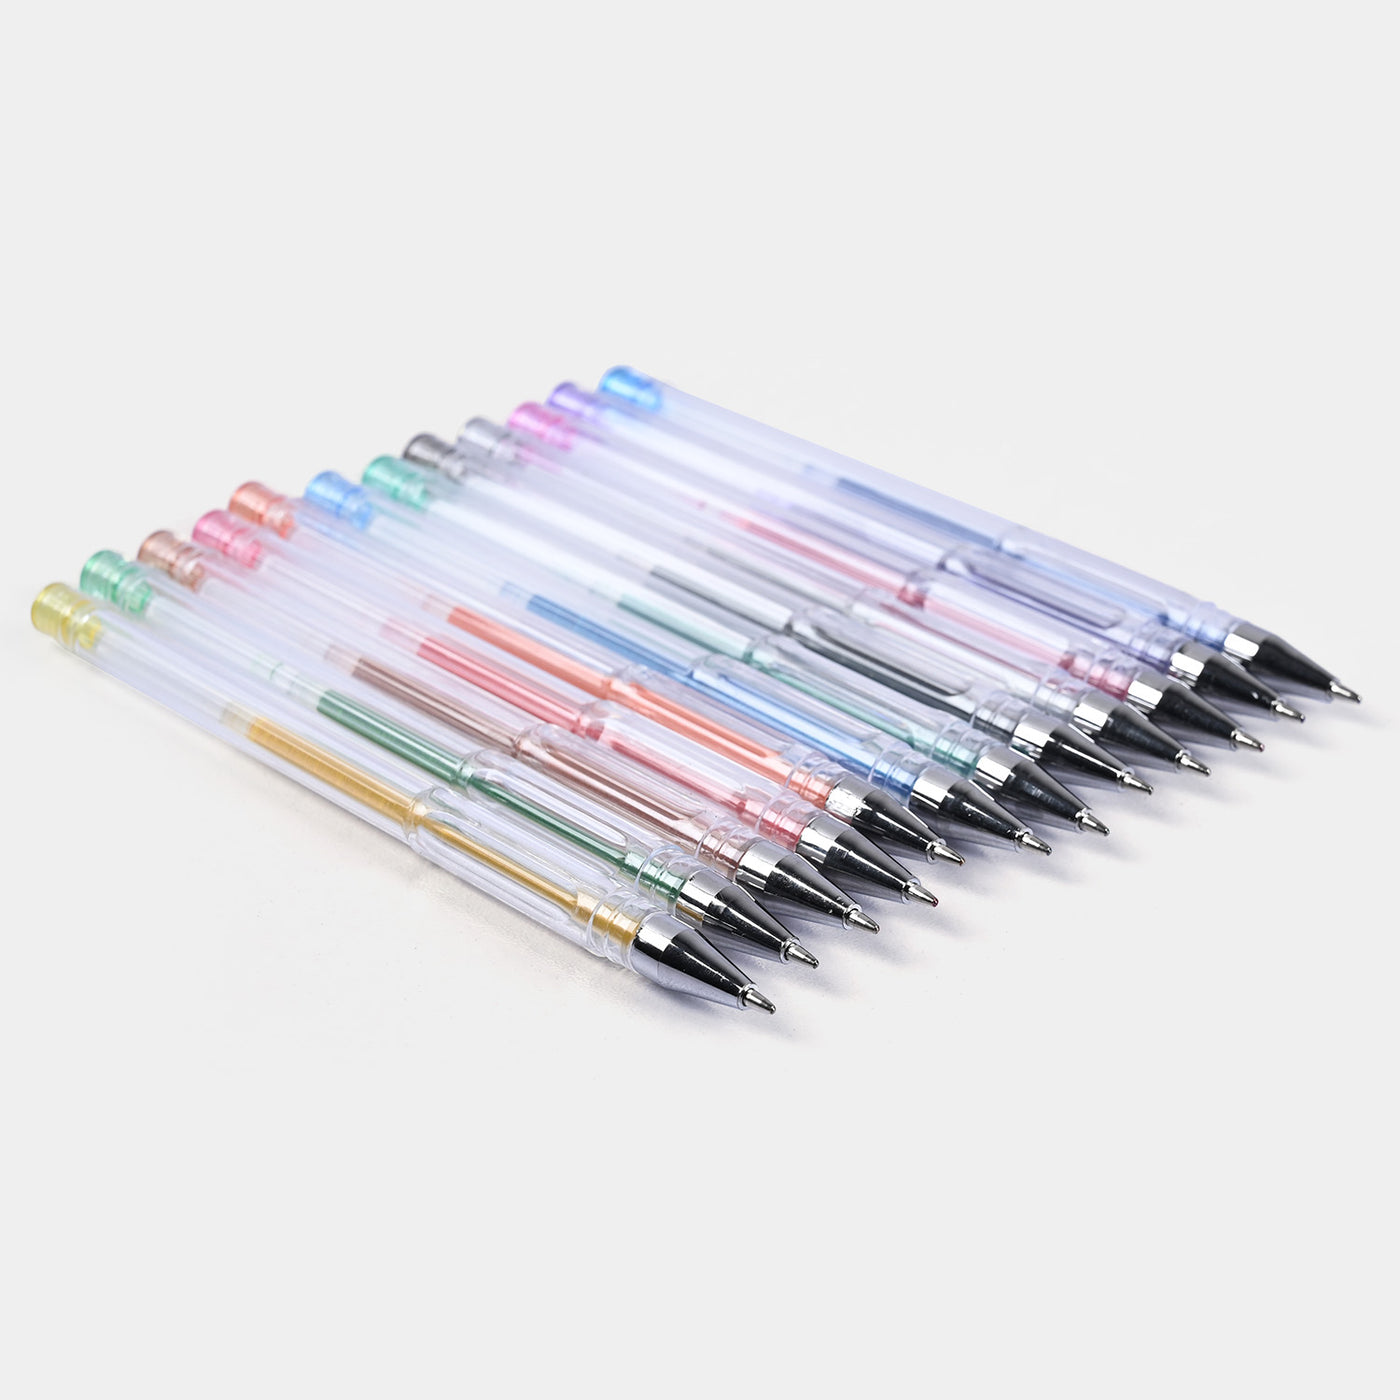 Glitter Pen 12Pcs Set For kids - Color